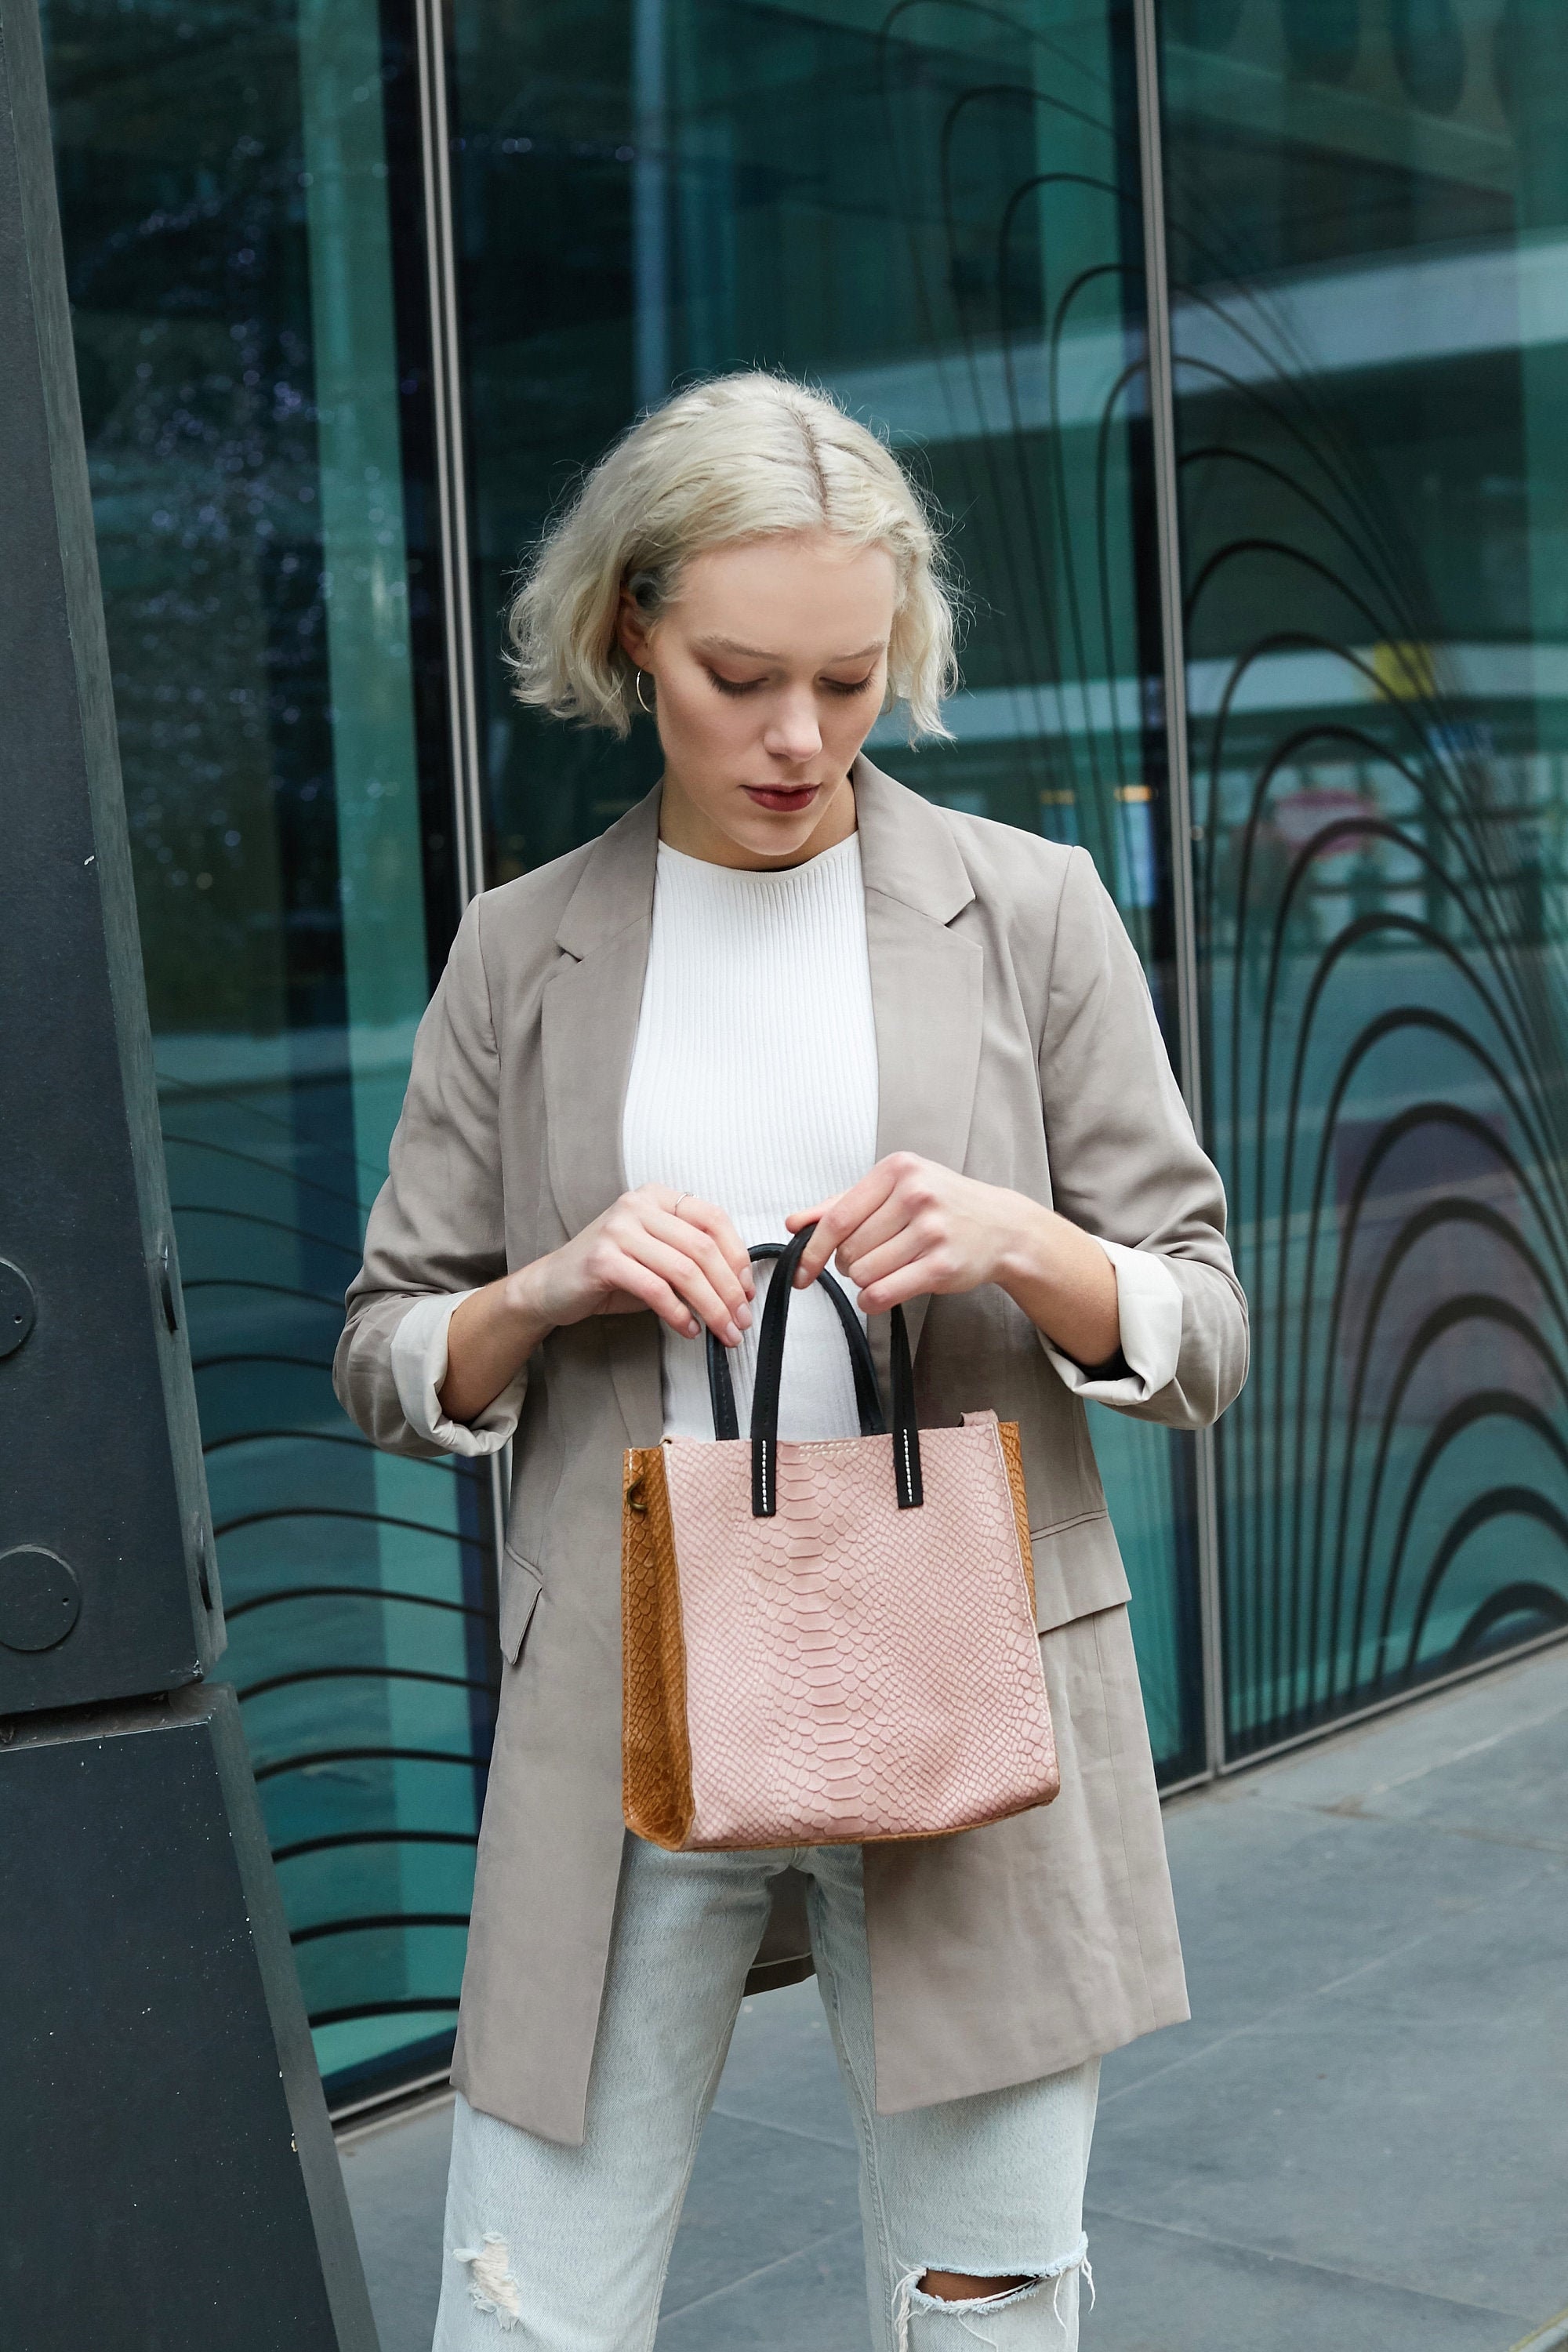 Pink Tote Bag / Pink Top Handle Bag / Brown Tote Handbag / -  Denmark